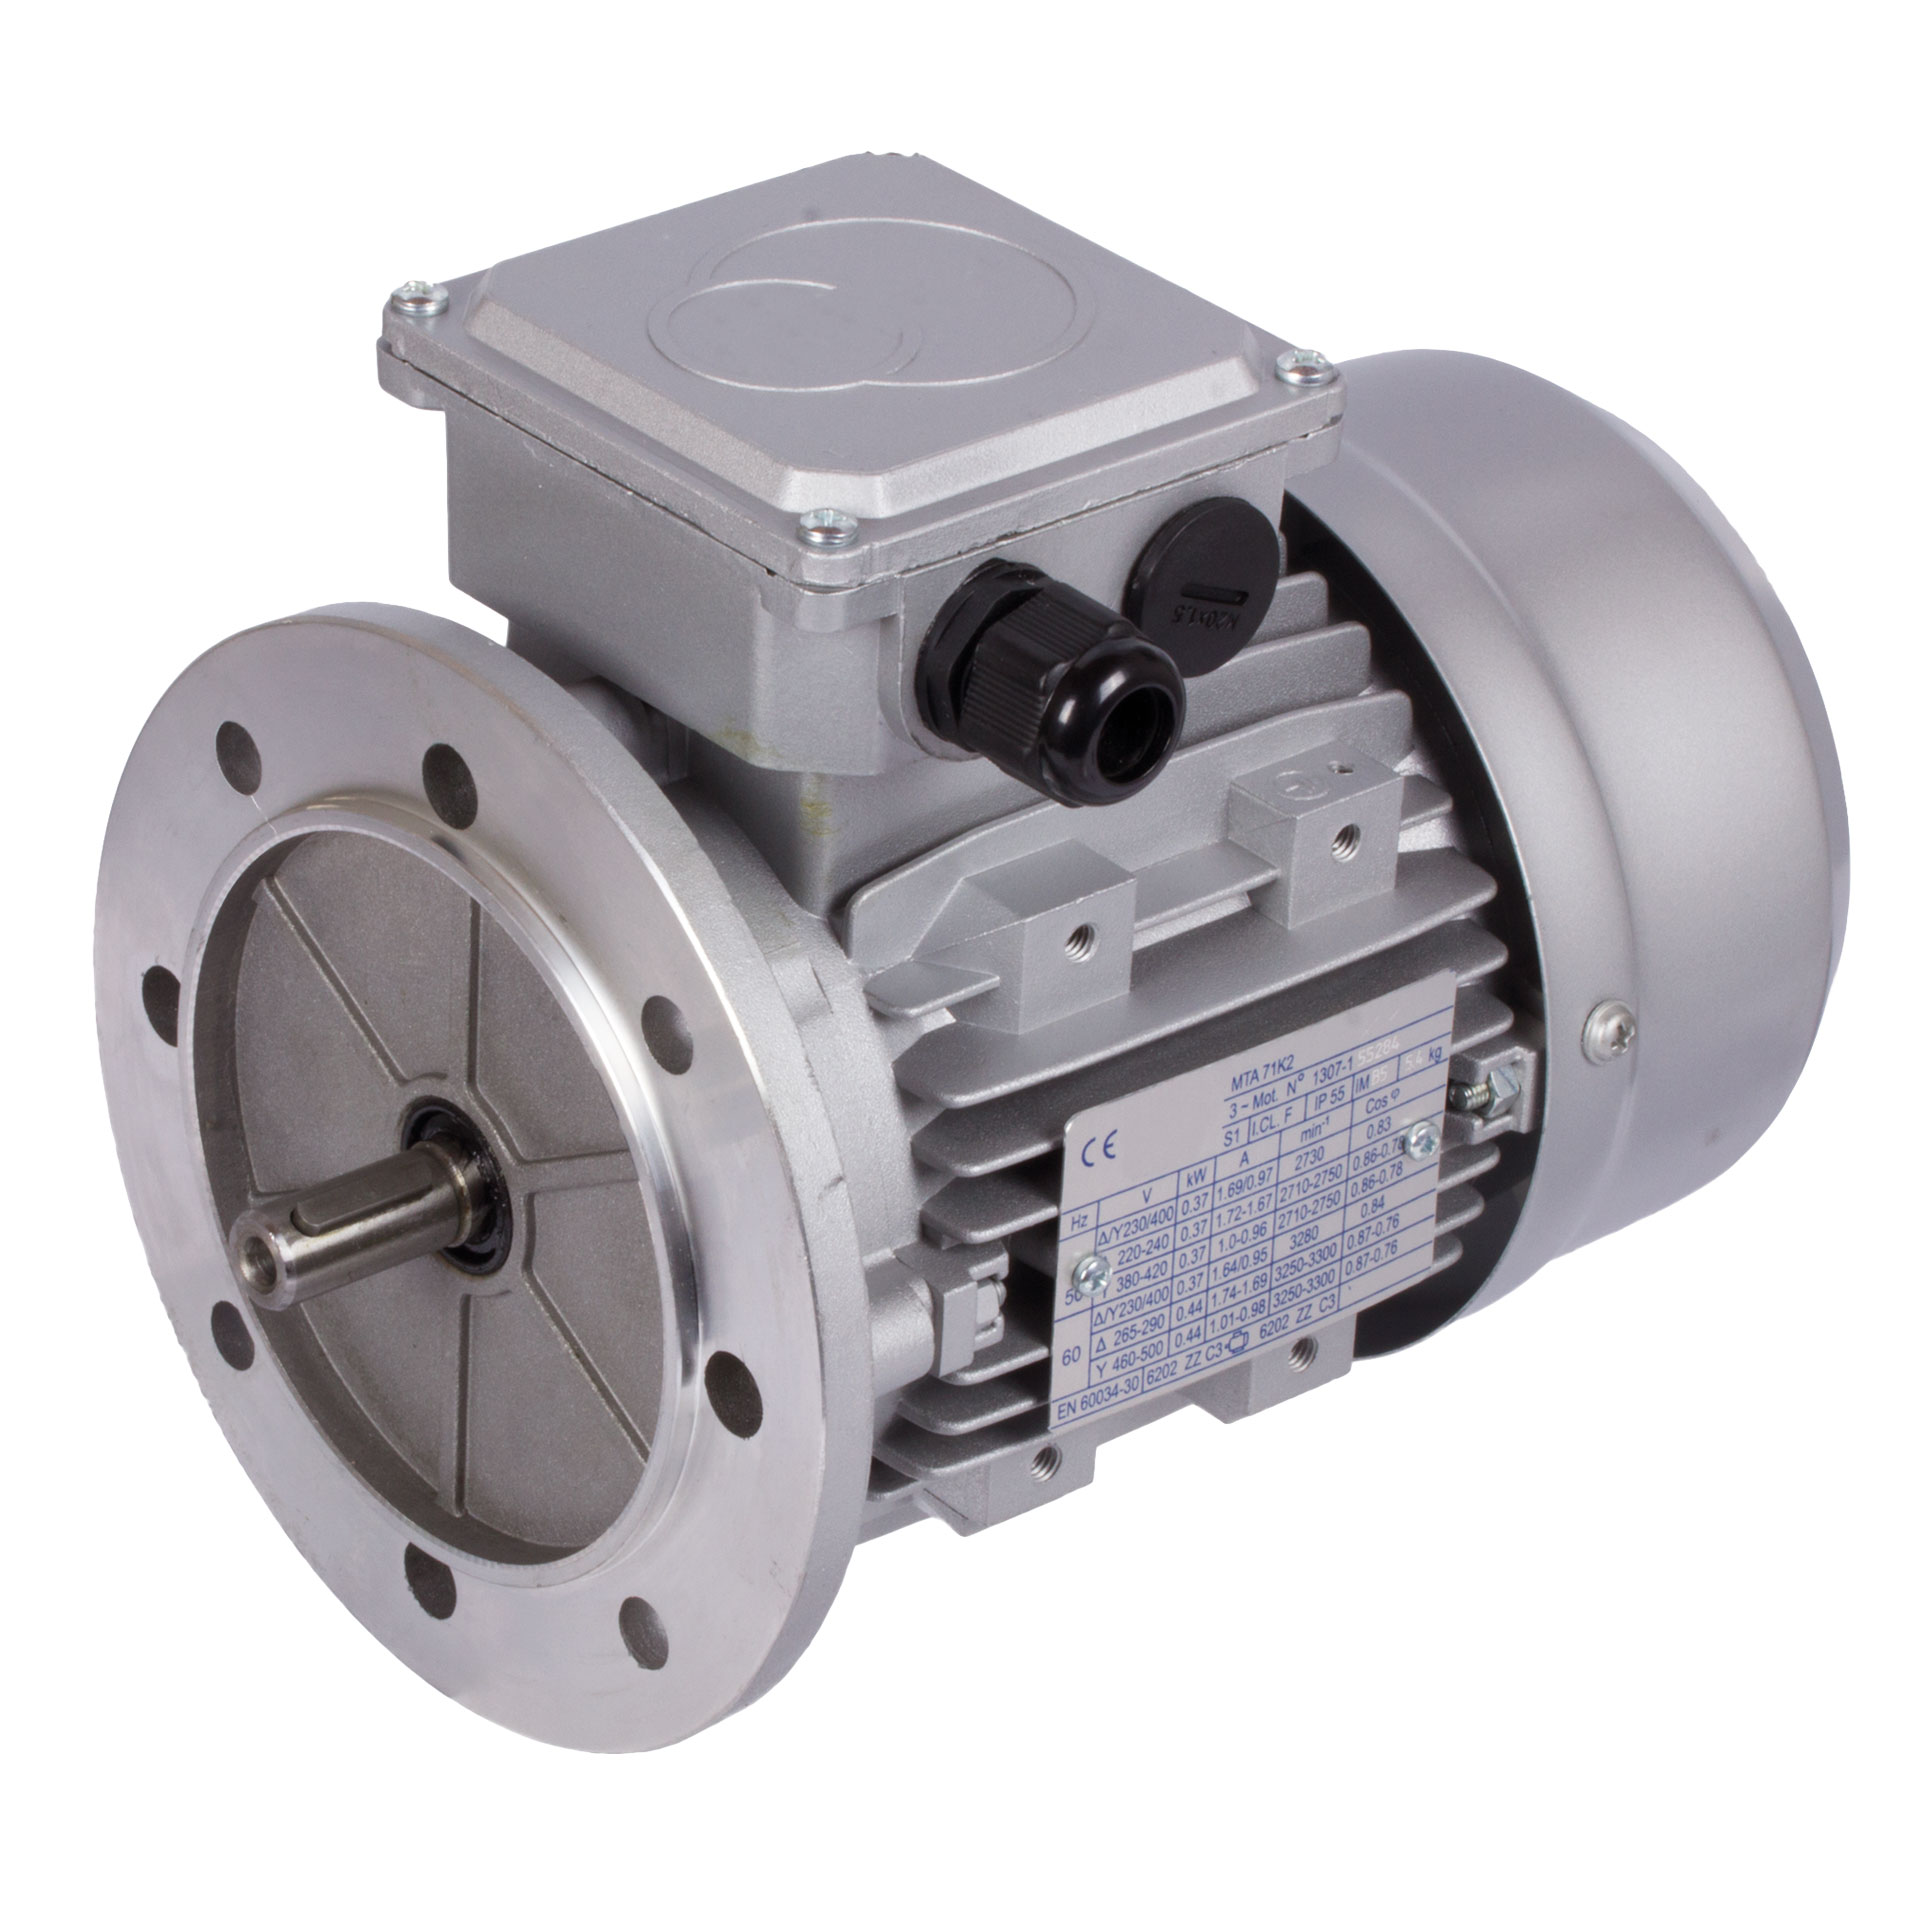 Single Phase Electric Motor 1.1 kW 4-pole 1500 rpm Capacitor Start 50 Hz 230 V 